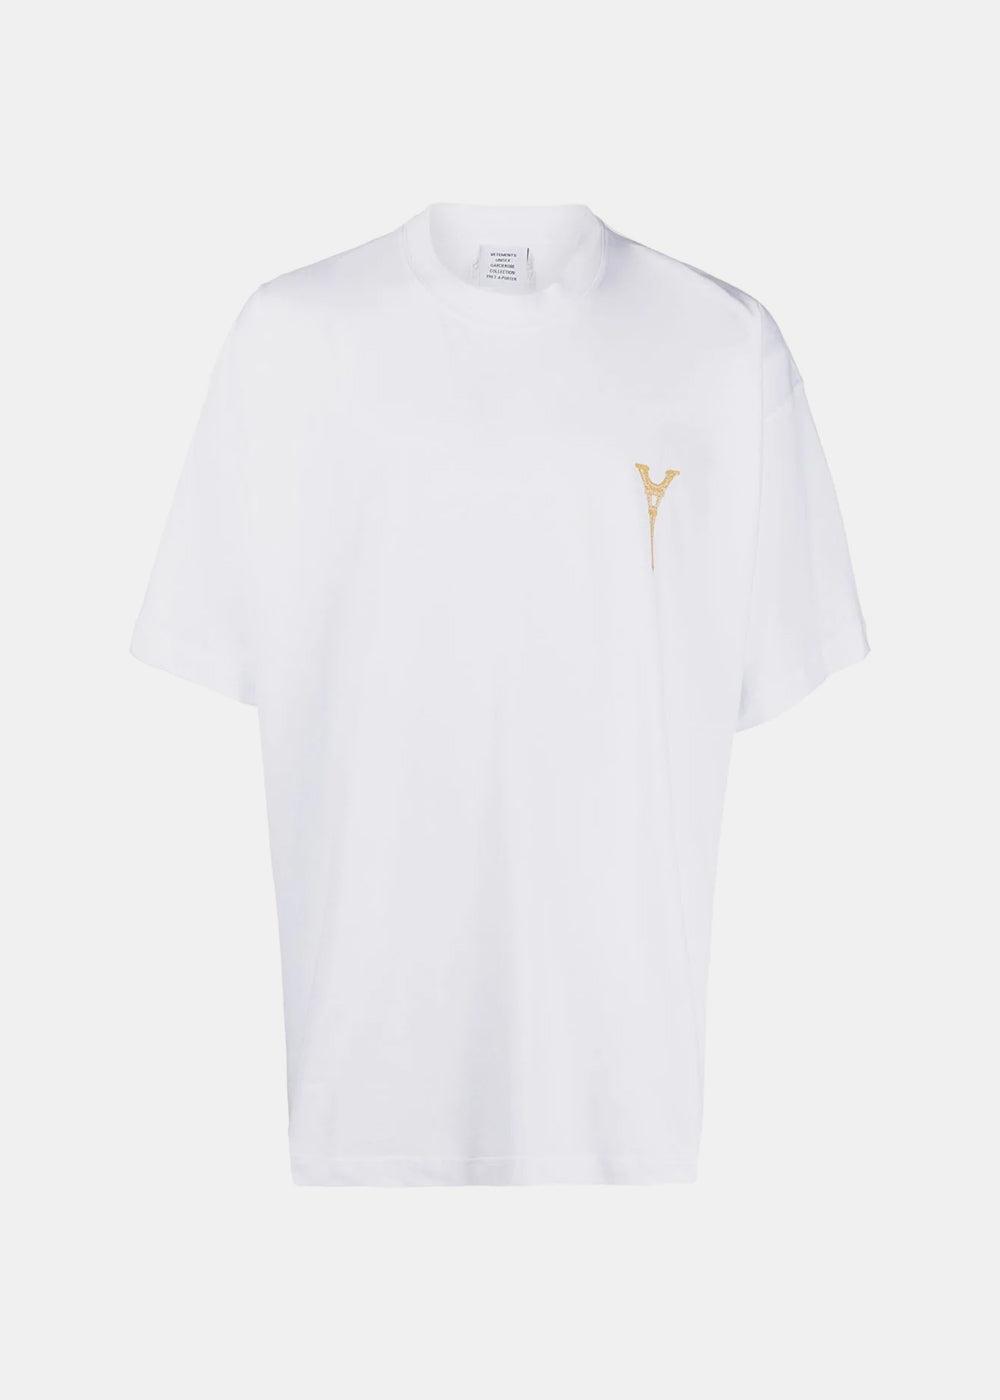 Vetements Eiffel Tower Logo T-shirt in White for Men | Lyst